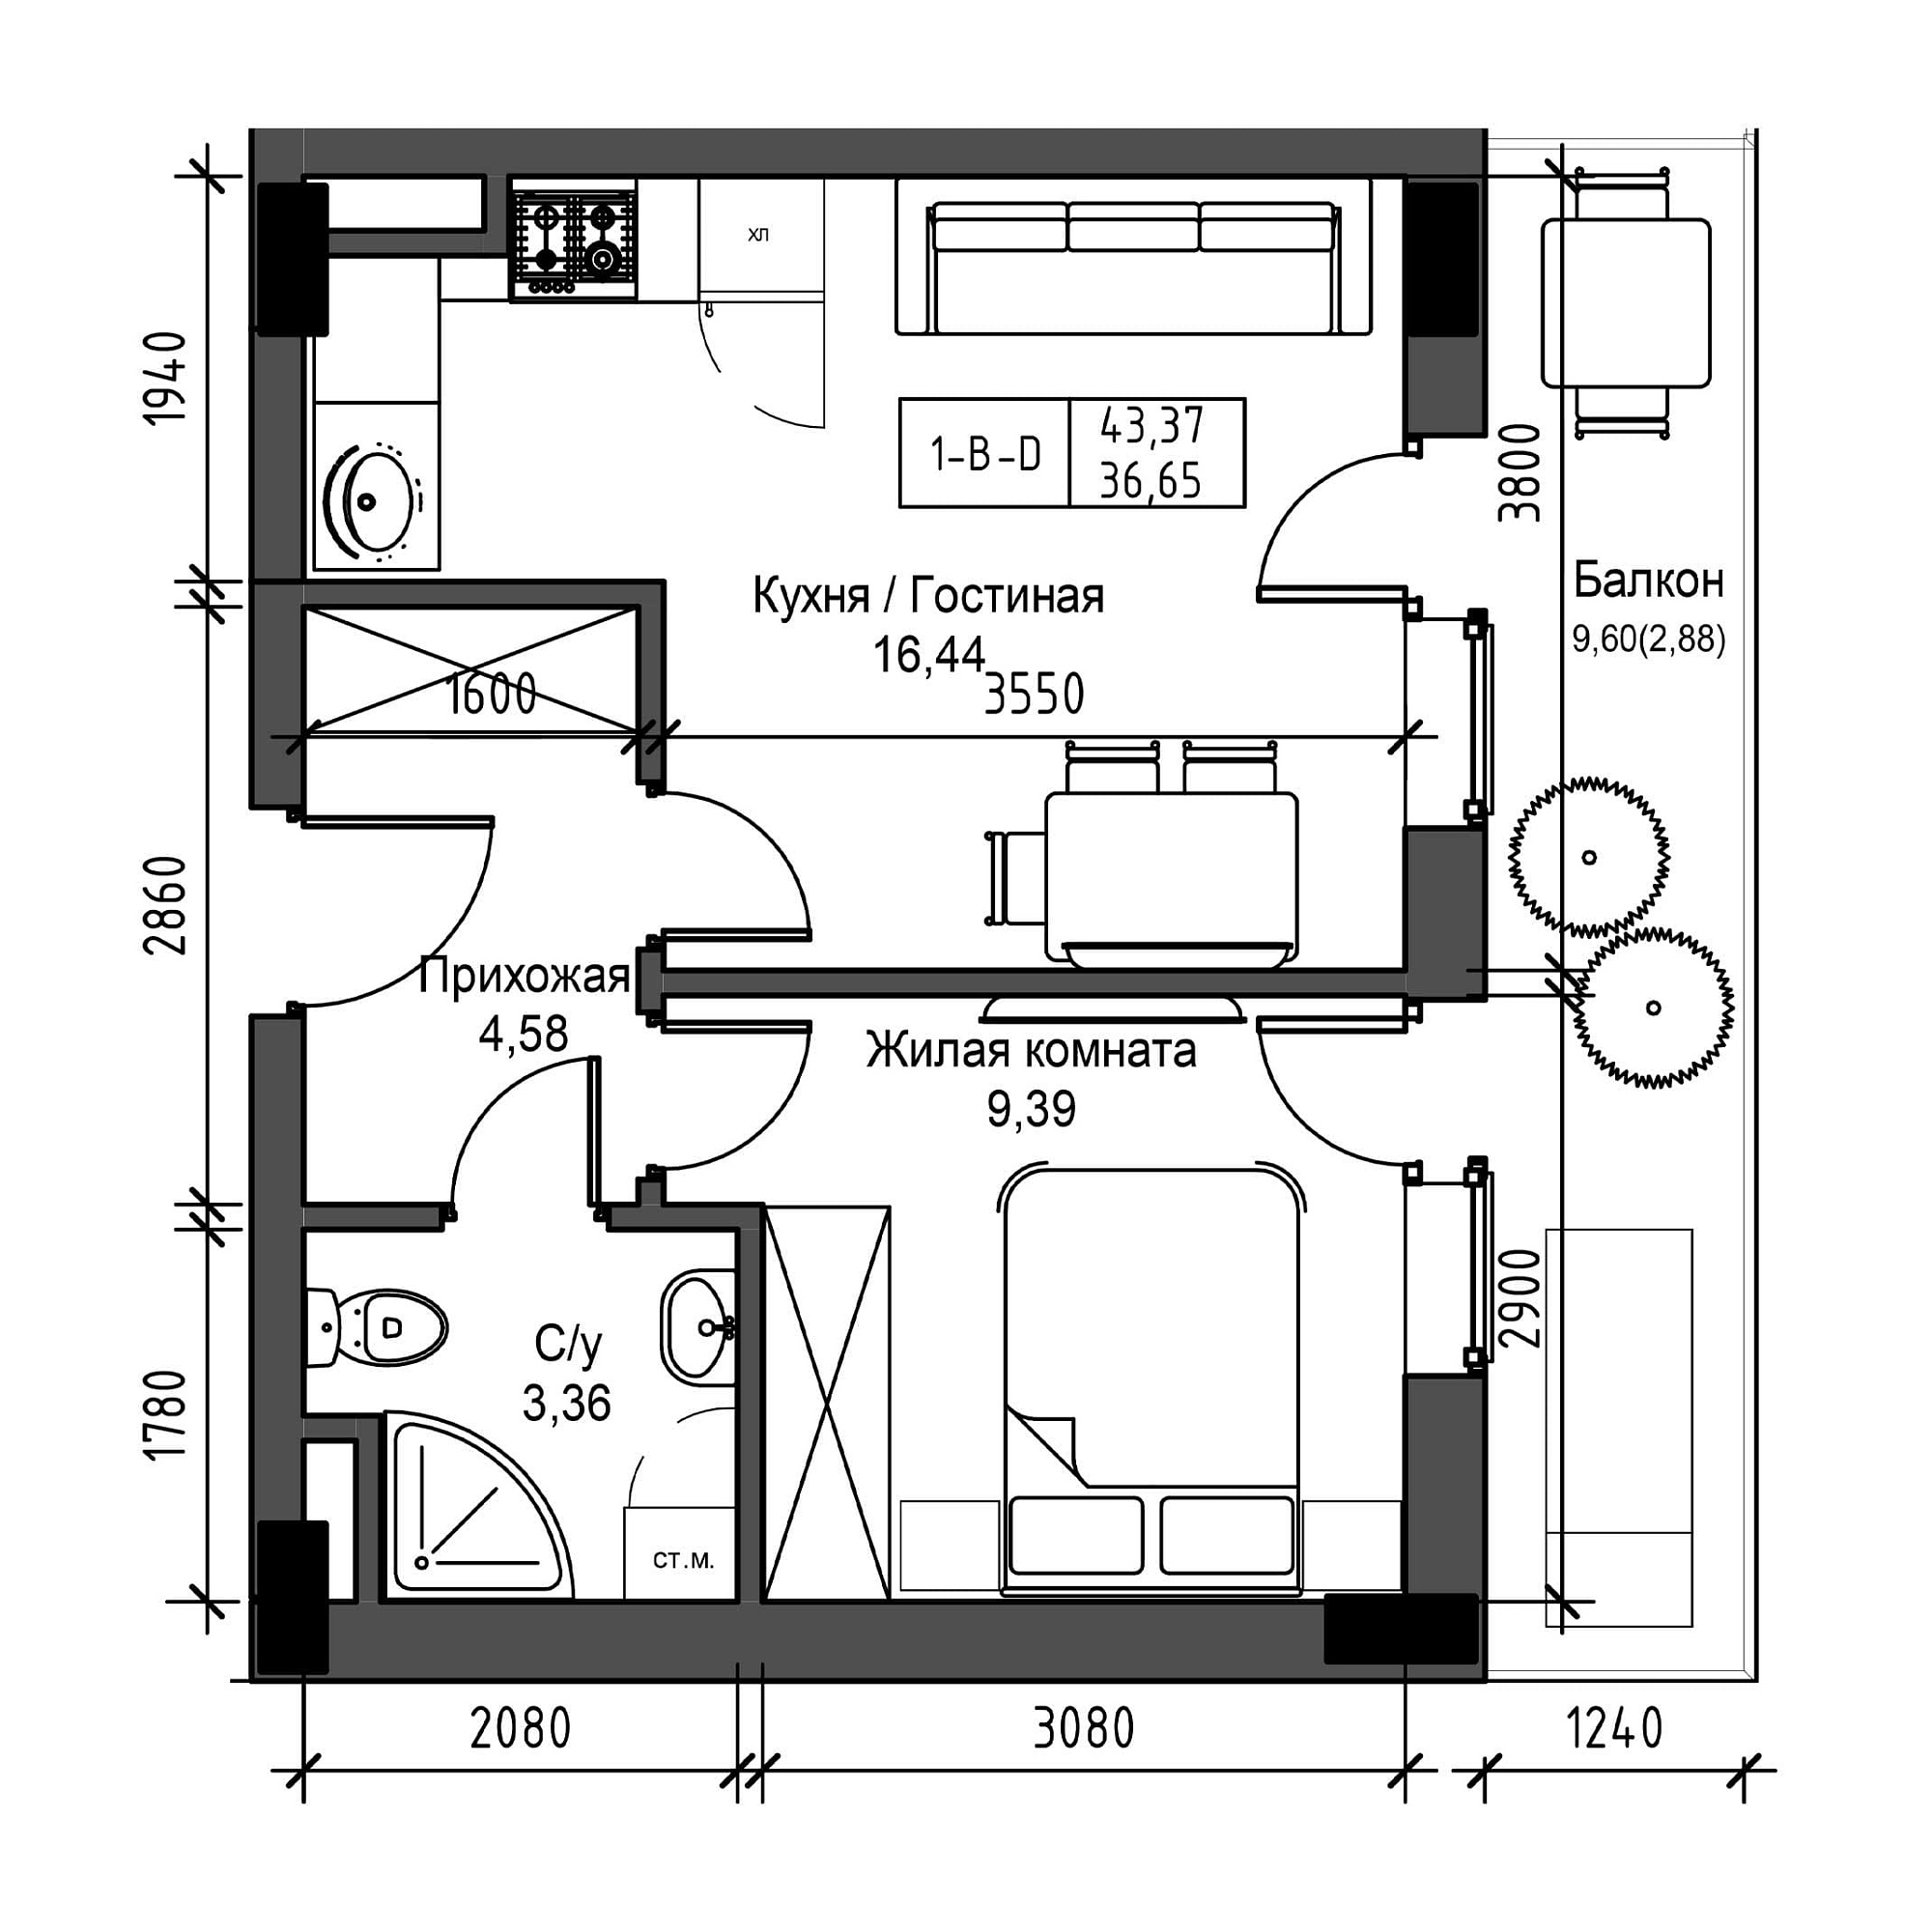 Planning 1-rm flats area 36.65m2, UM-001-04/0002.